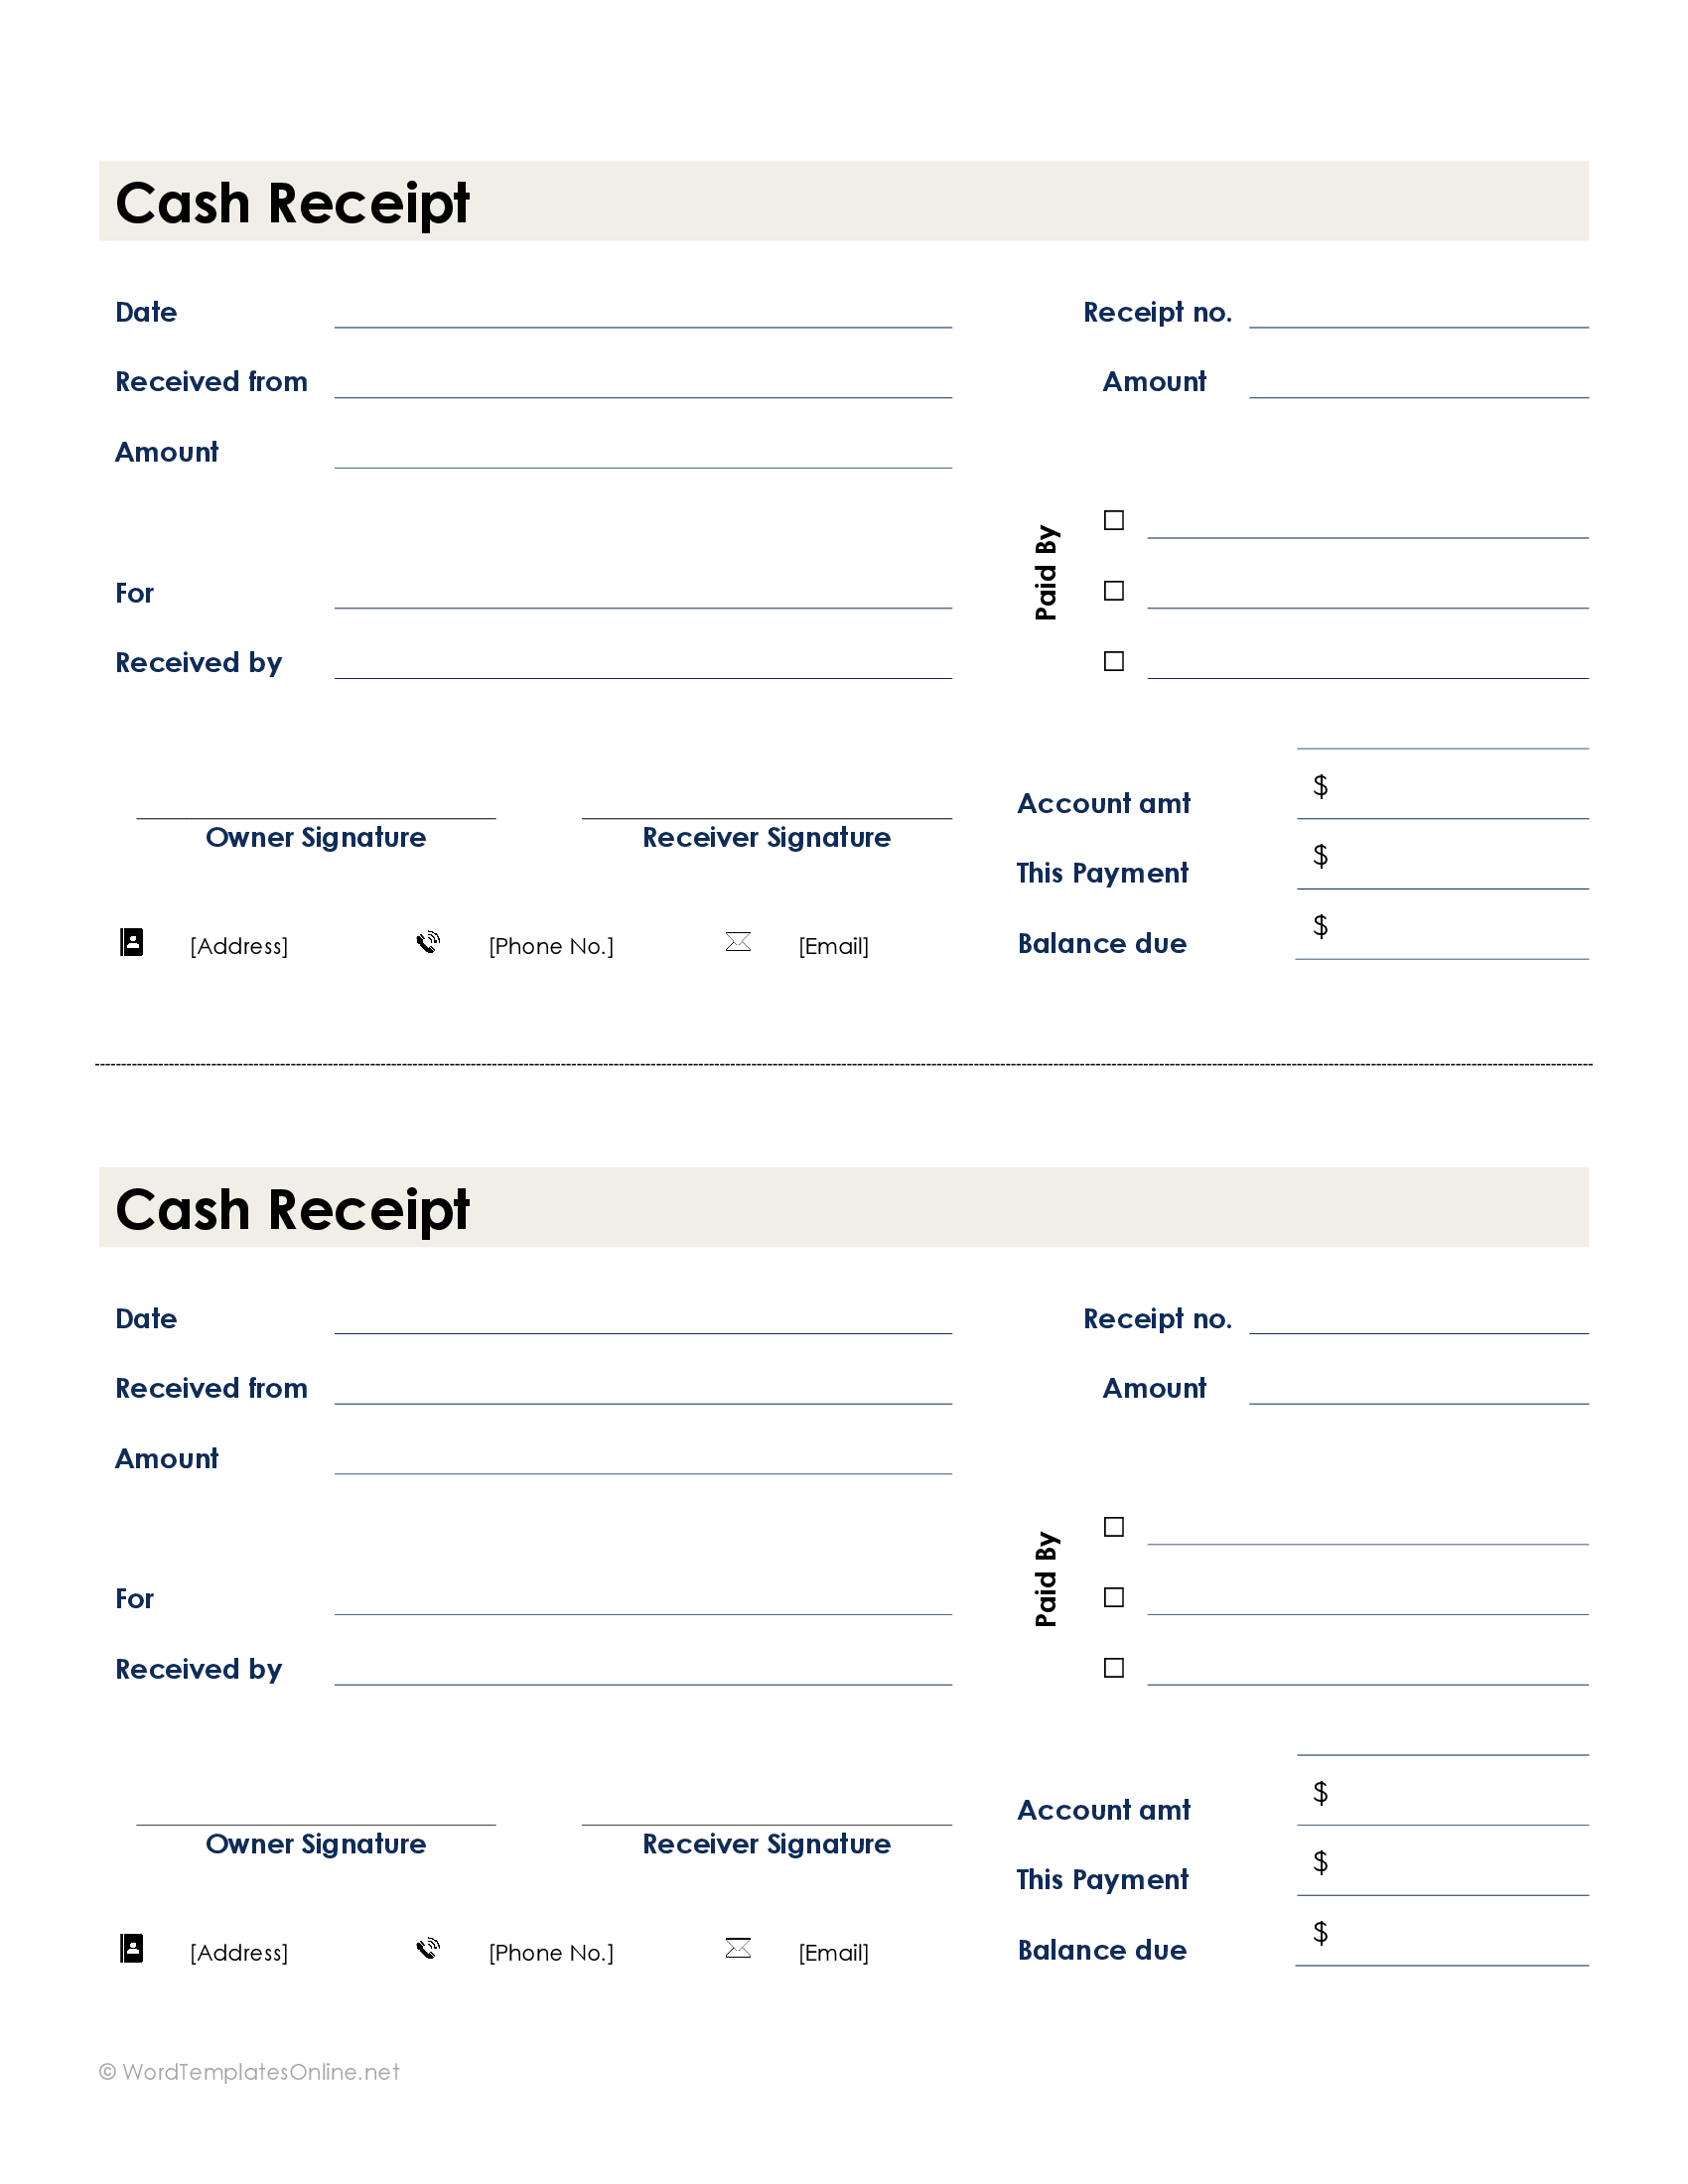 printable-cash-receipt-template-free-free-printable-templates